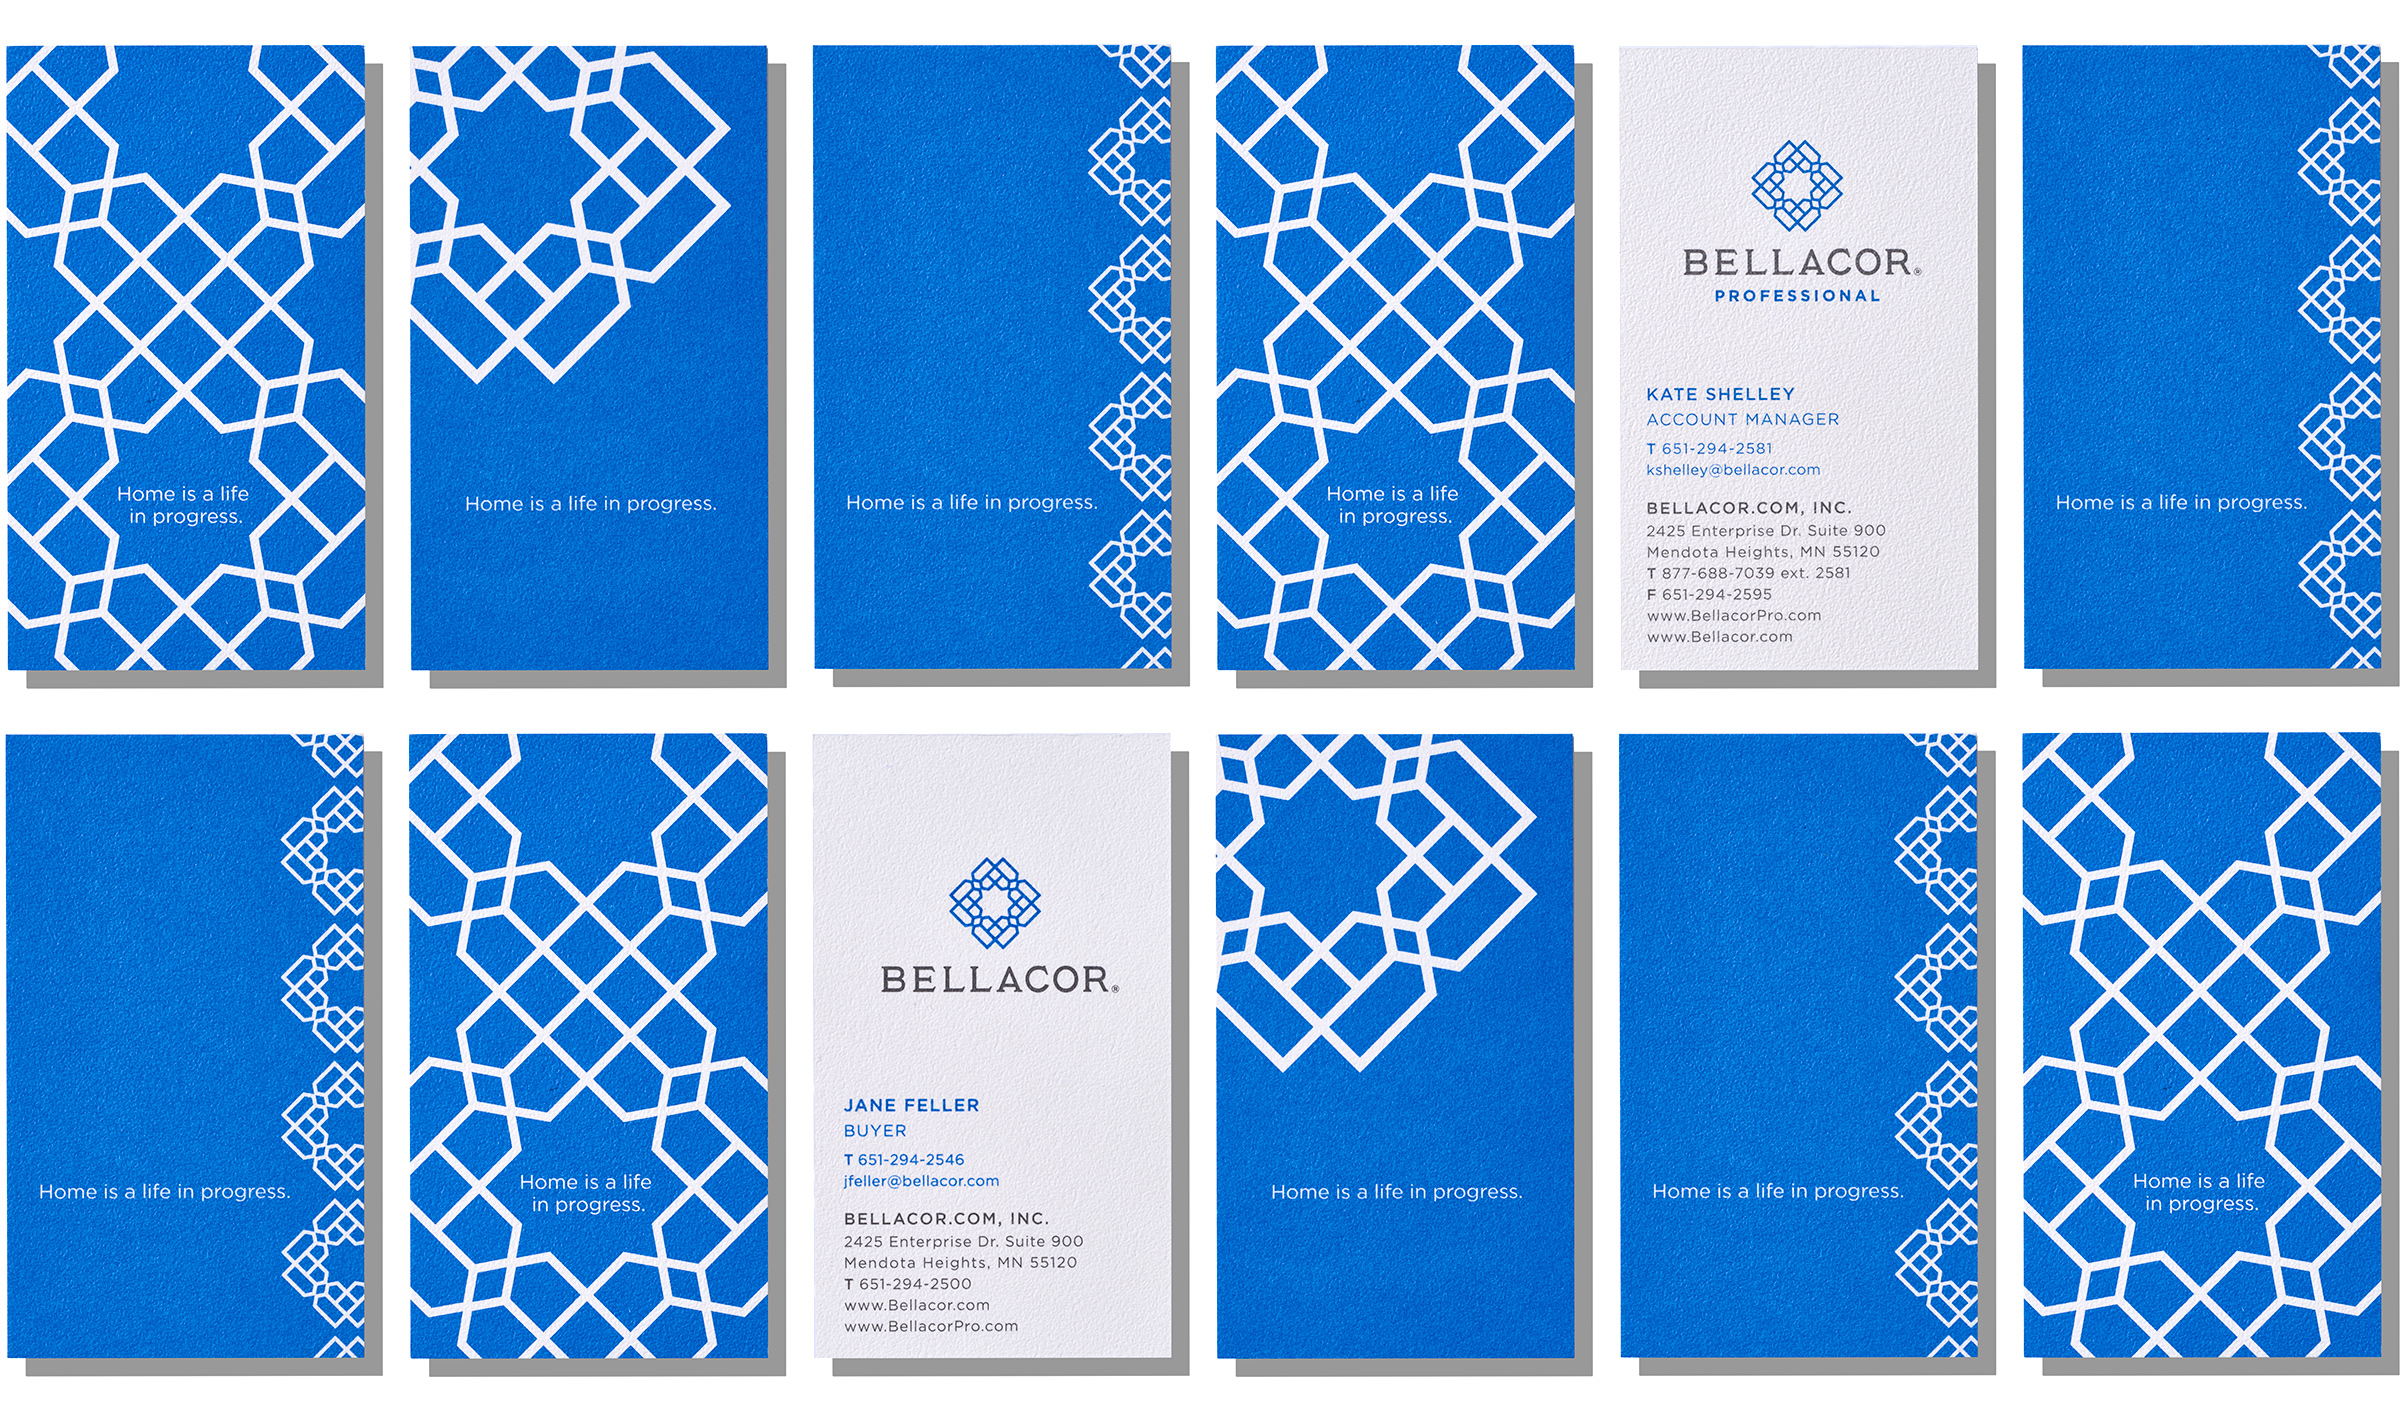 Bellacor business card design by Werner Design Werks, Minneapolis MN